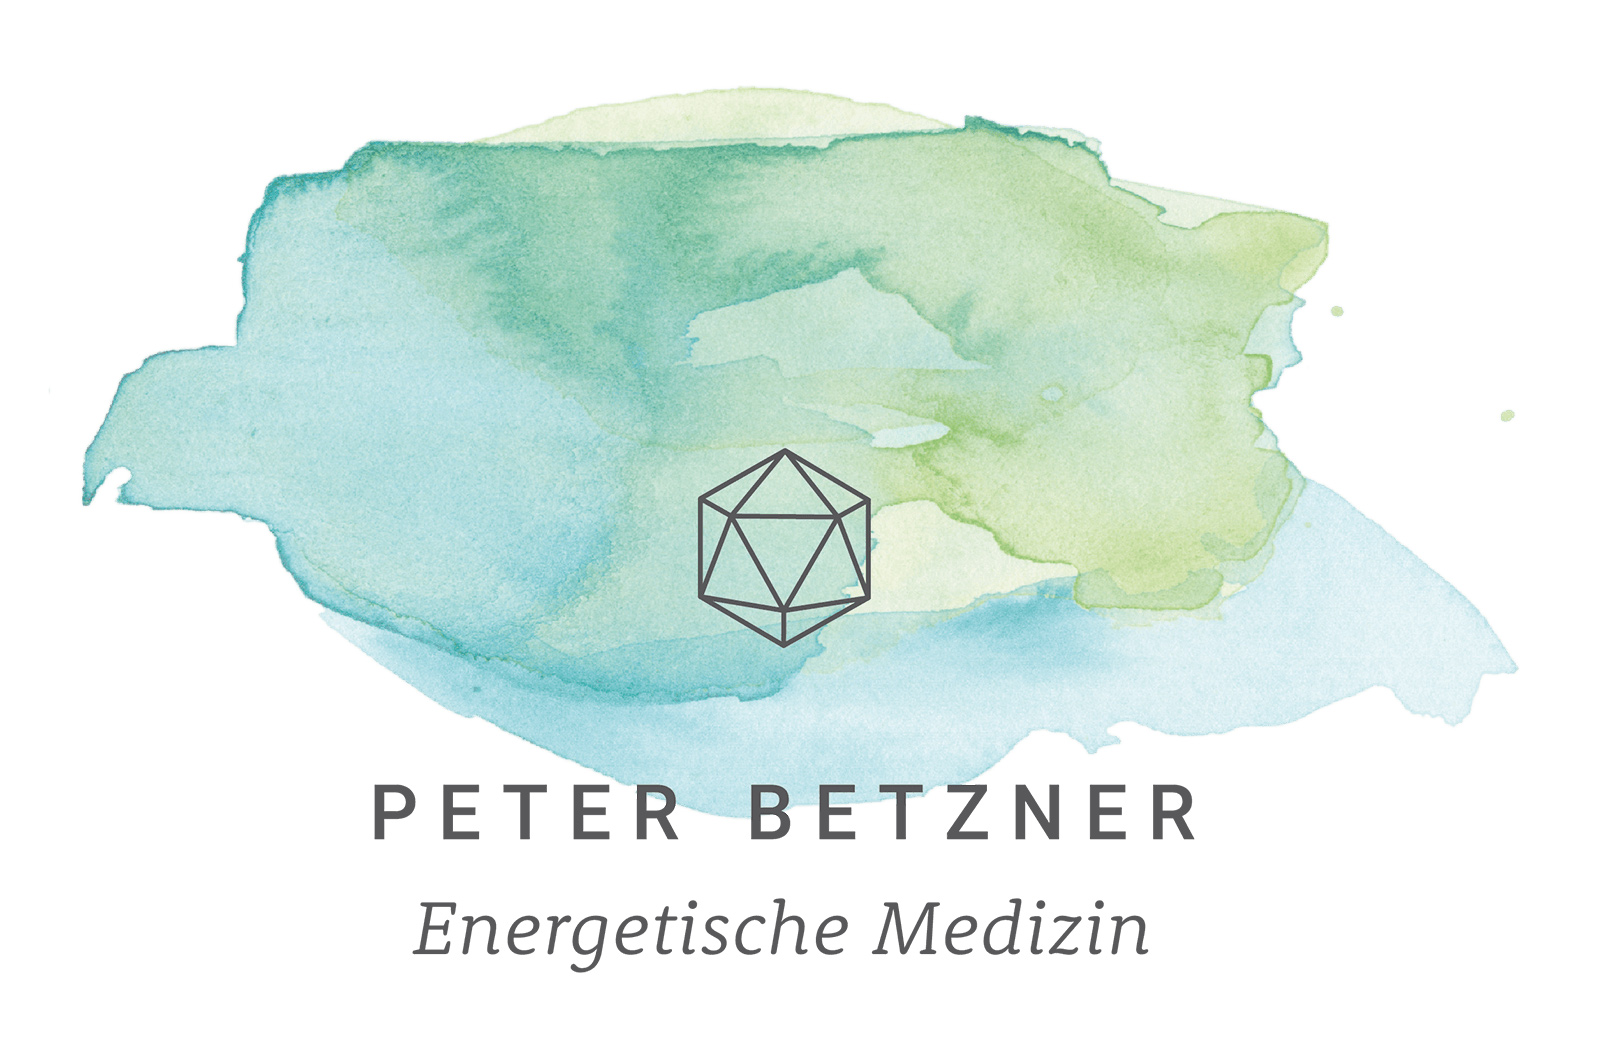 Peter Betzner - Praxis für energetische Medizin Darmstadt